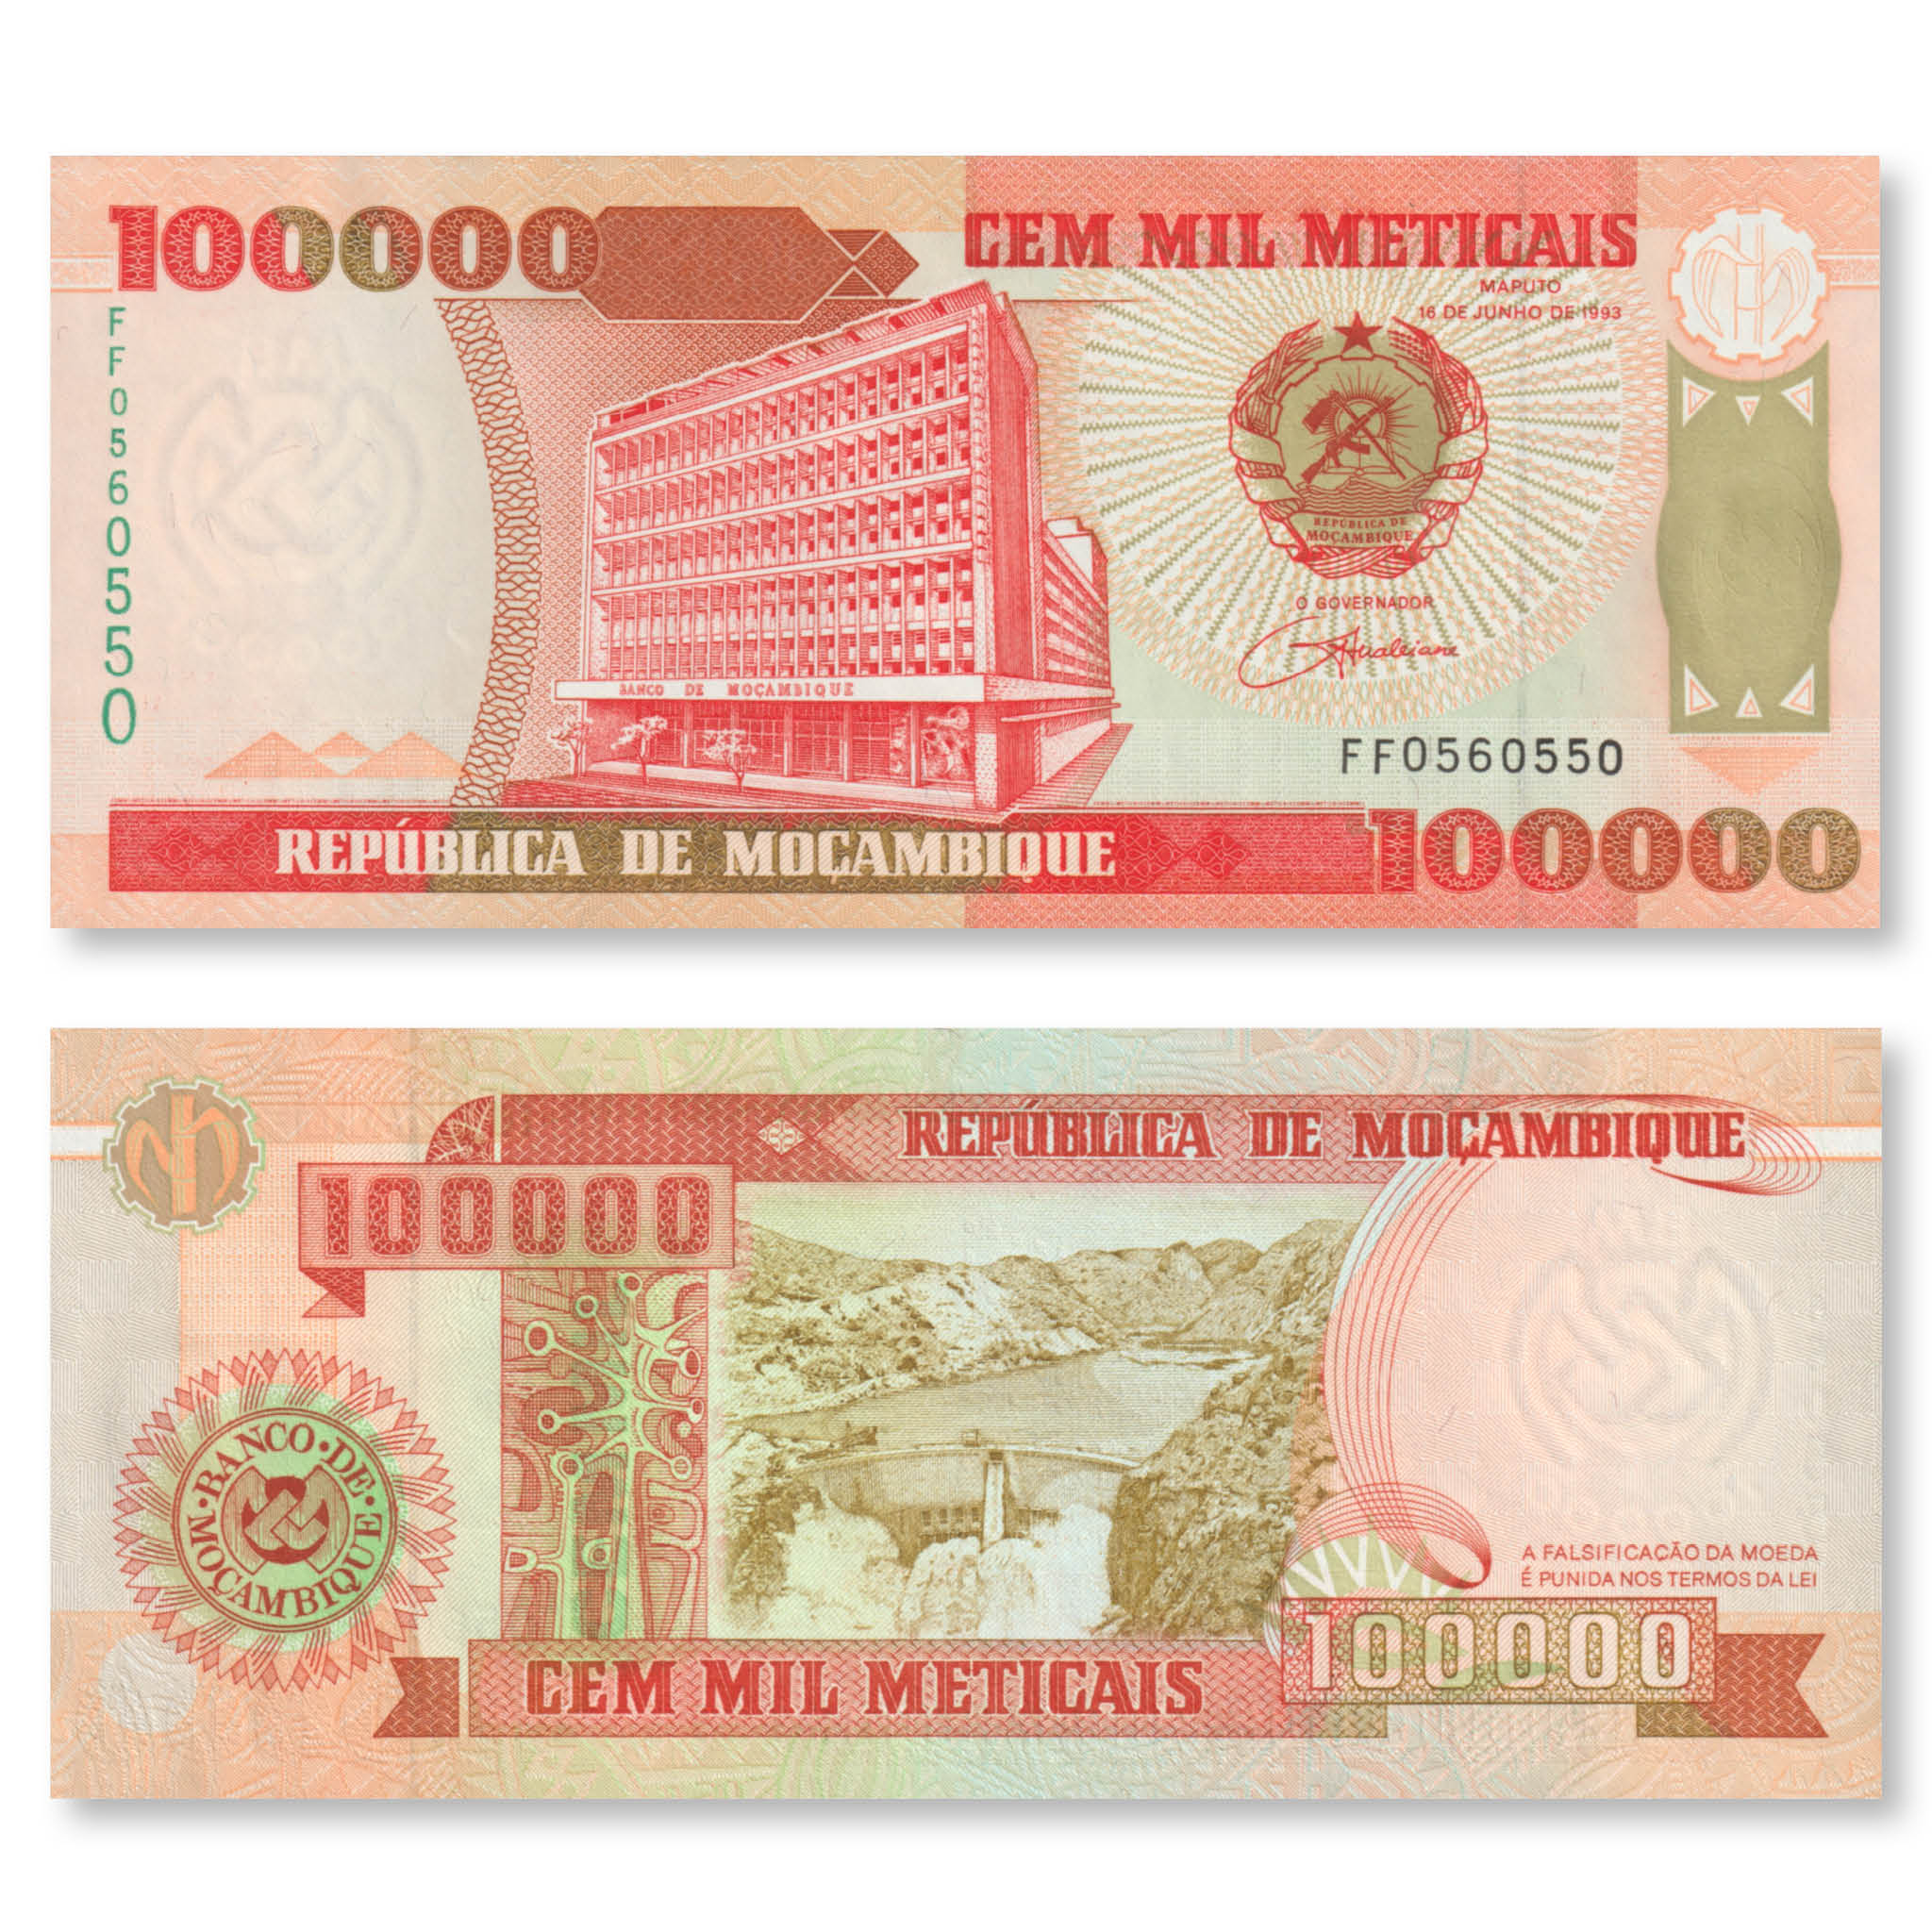 Mozambique 100,000 Meticais, 1993, B225a, P139, UNC - Robert's World Money - World Banknotes